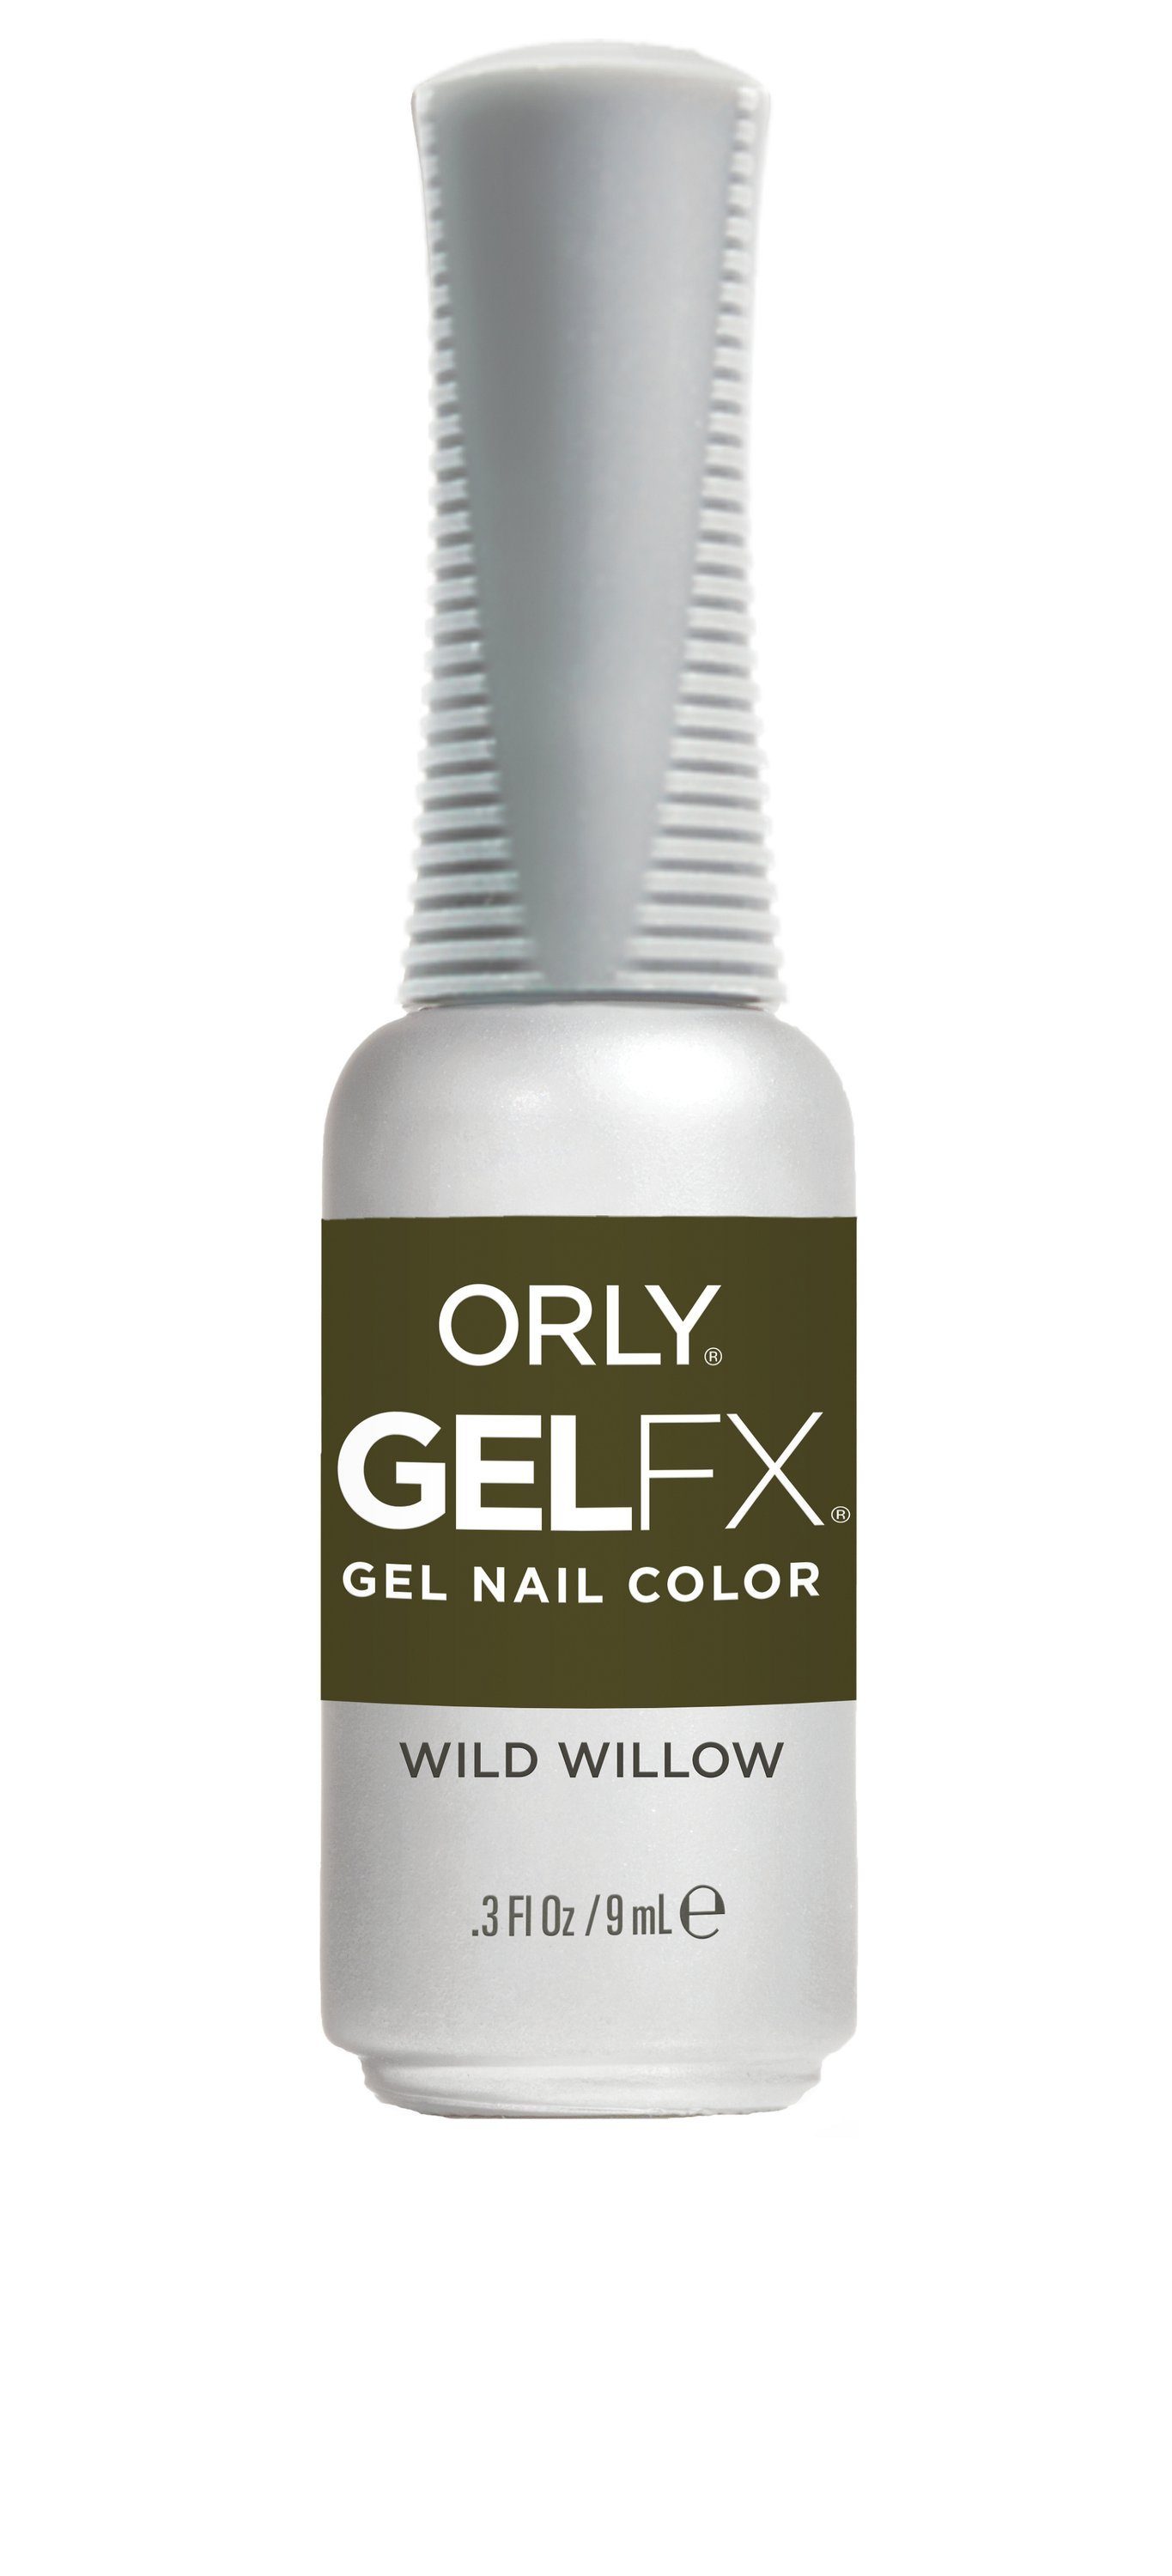 ORLY UV-Nagellack ORLY GEL FX Wild Willow, 9 ml